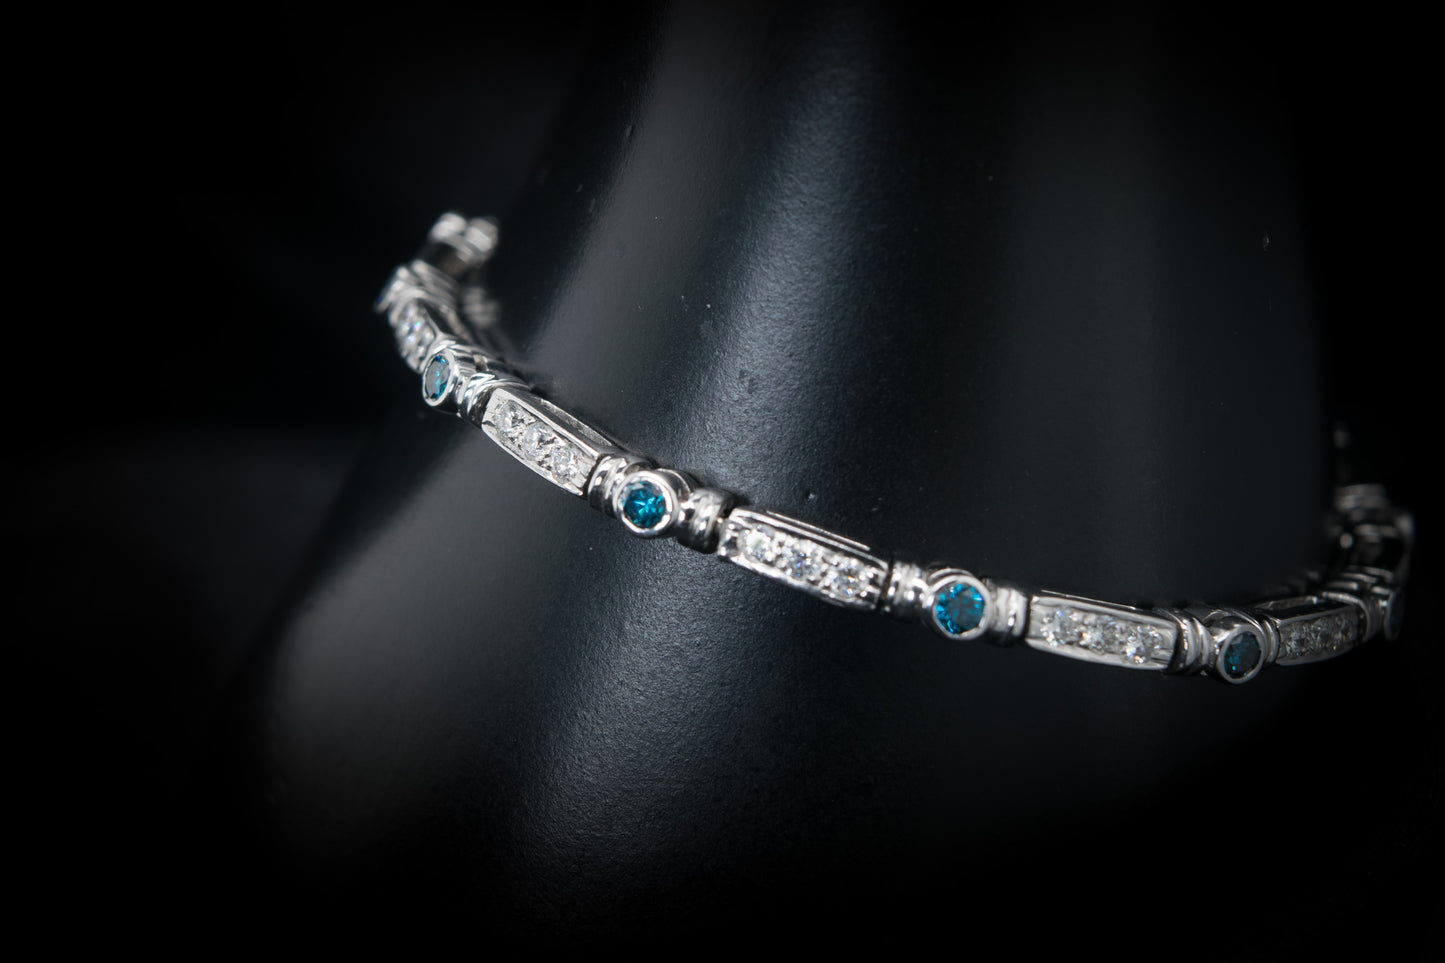 14kt WG Bracelet with Diamond and Blue Stones